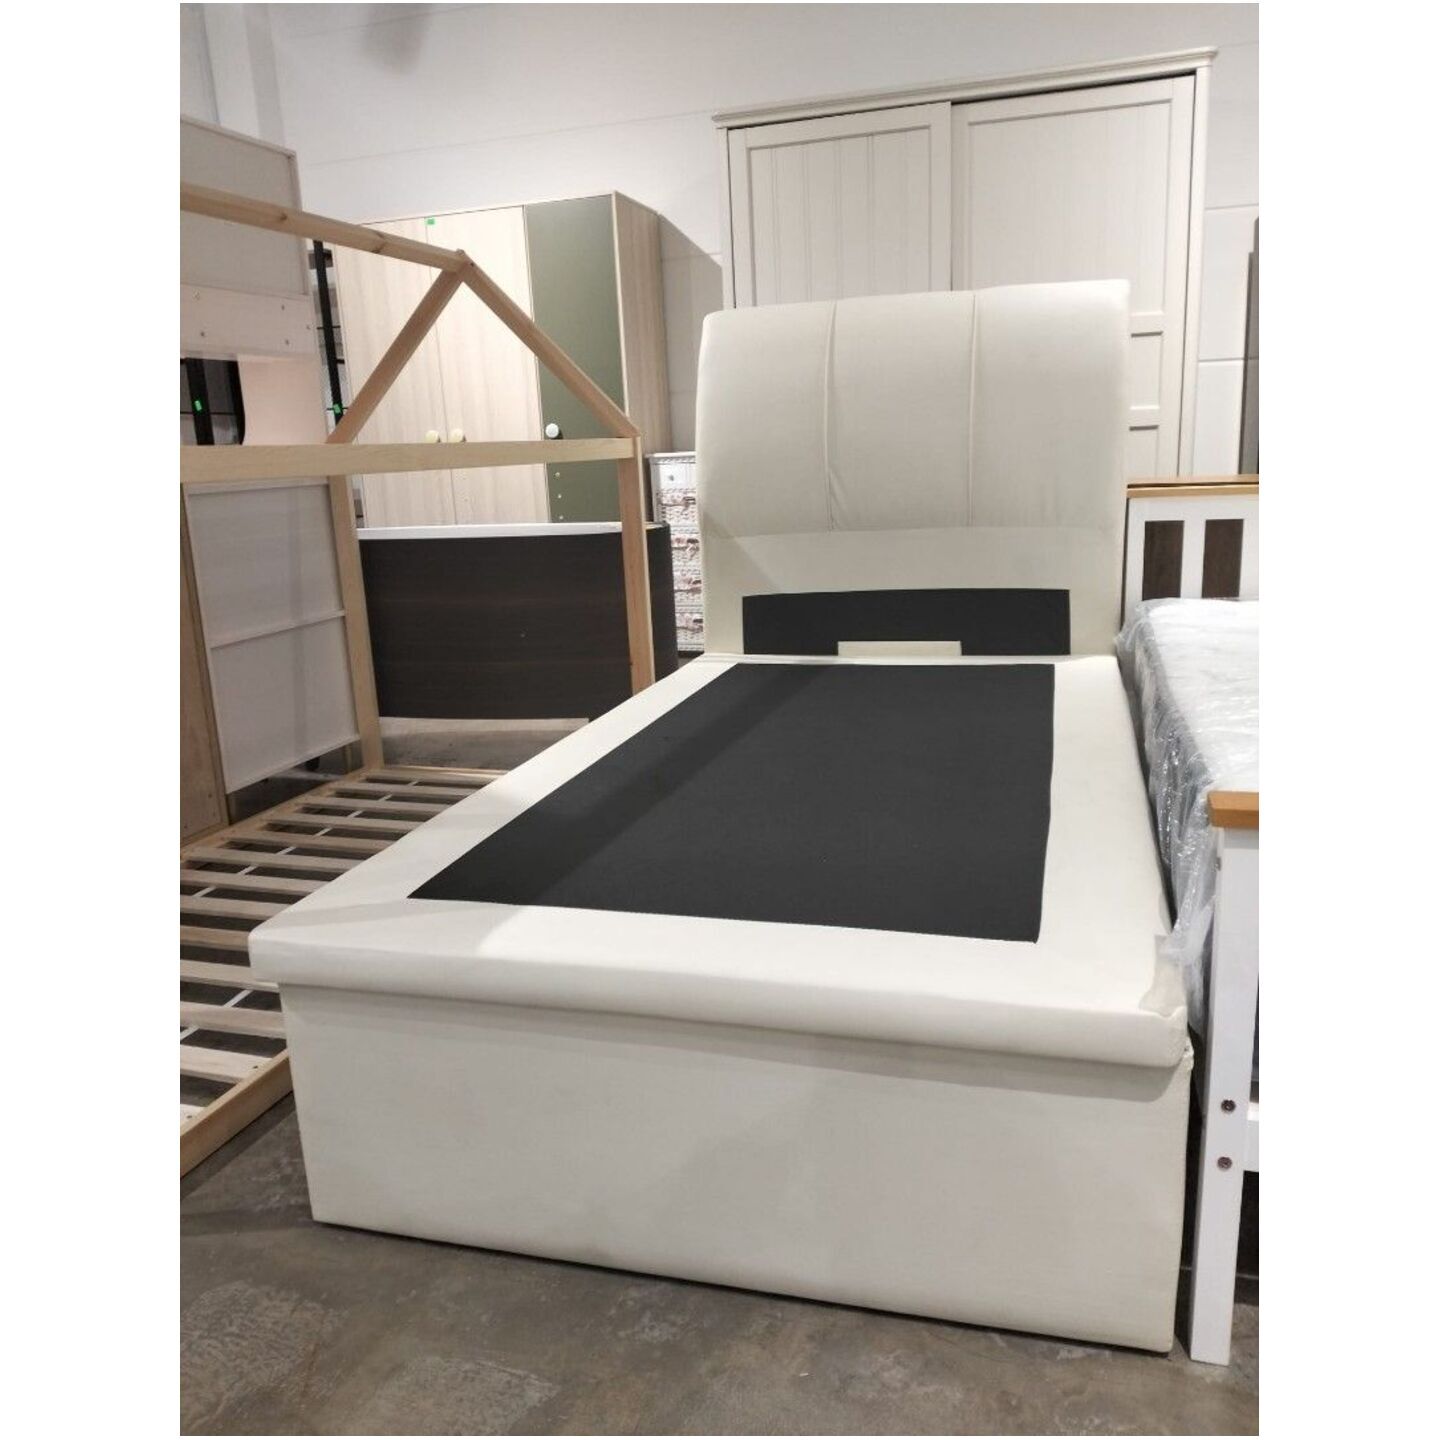 ESCOBAN Super Single Size Storage Bedframe in PLATINUM WHITE PU